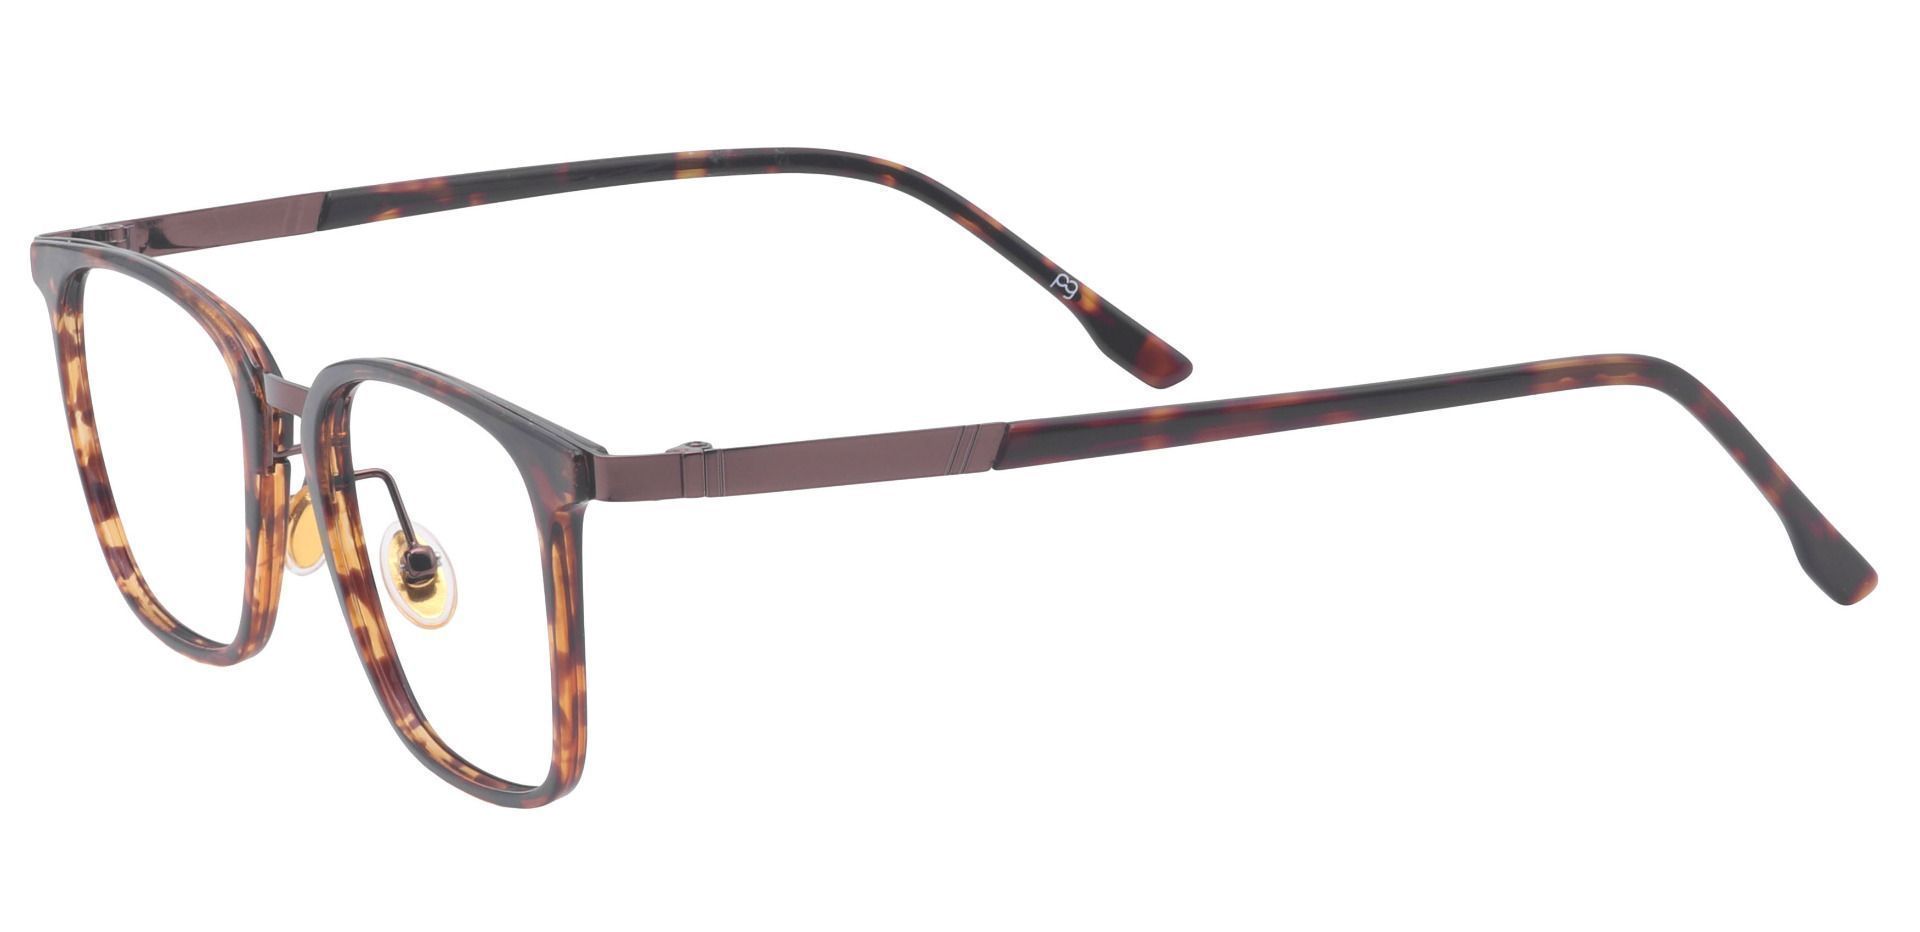 Rigby Oval Eyeglasses Frame - Leopard